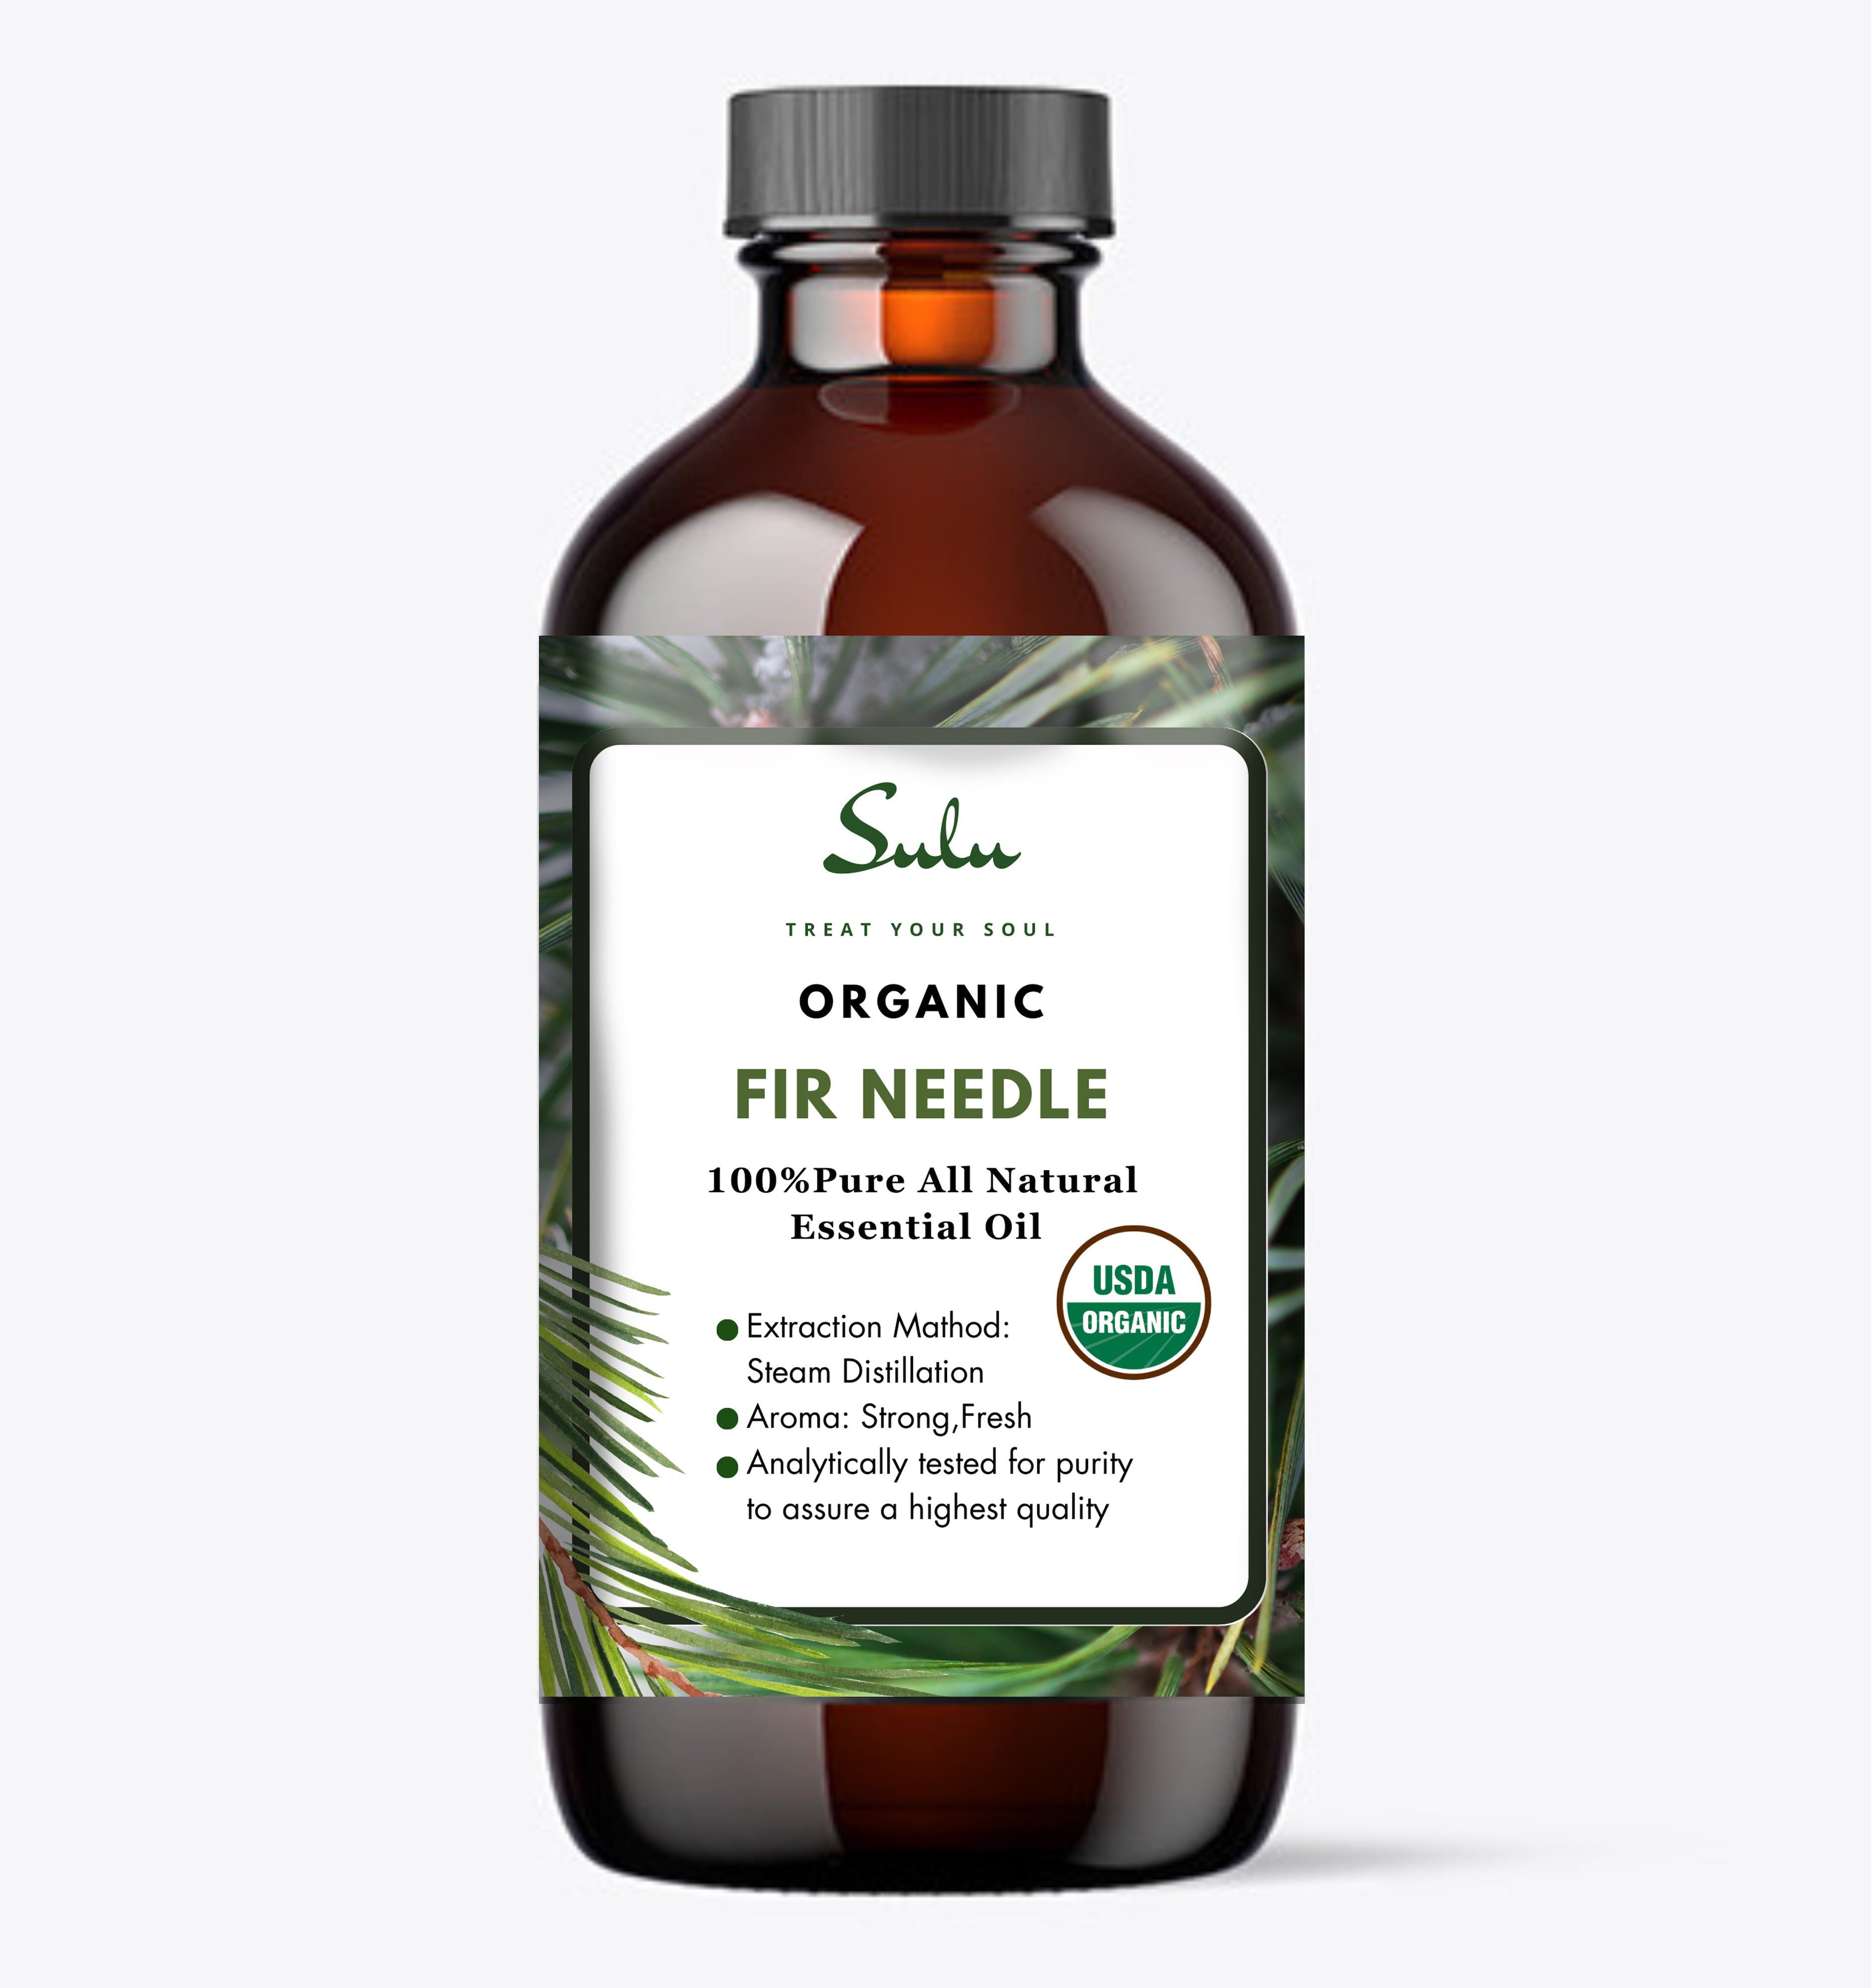 Pure, Therapeutic Grade Essential Oils - Organic Creations Inc.